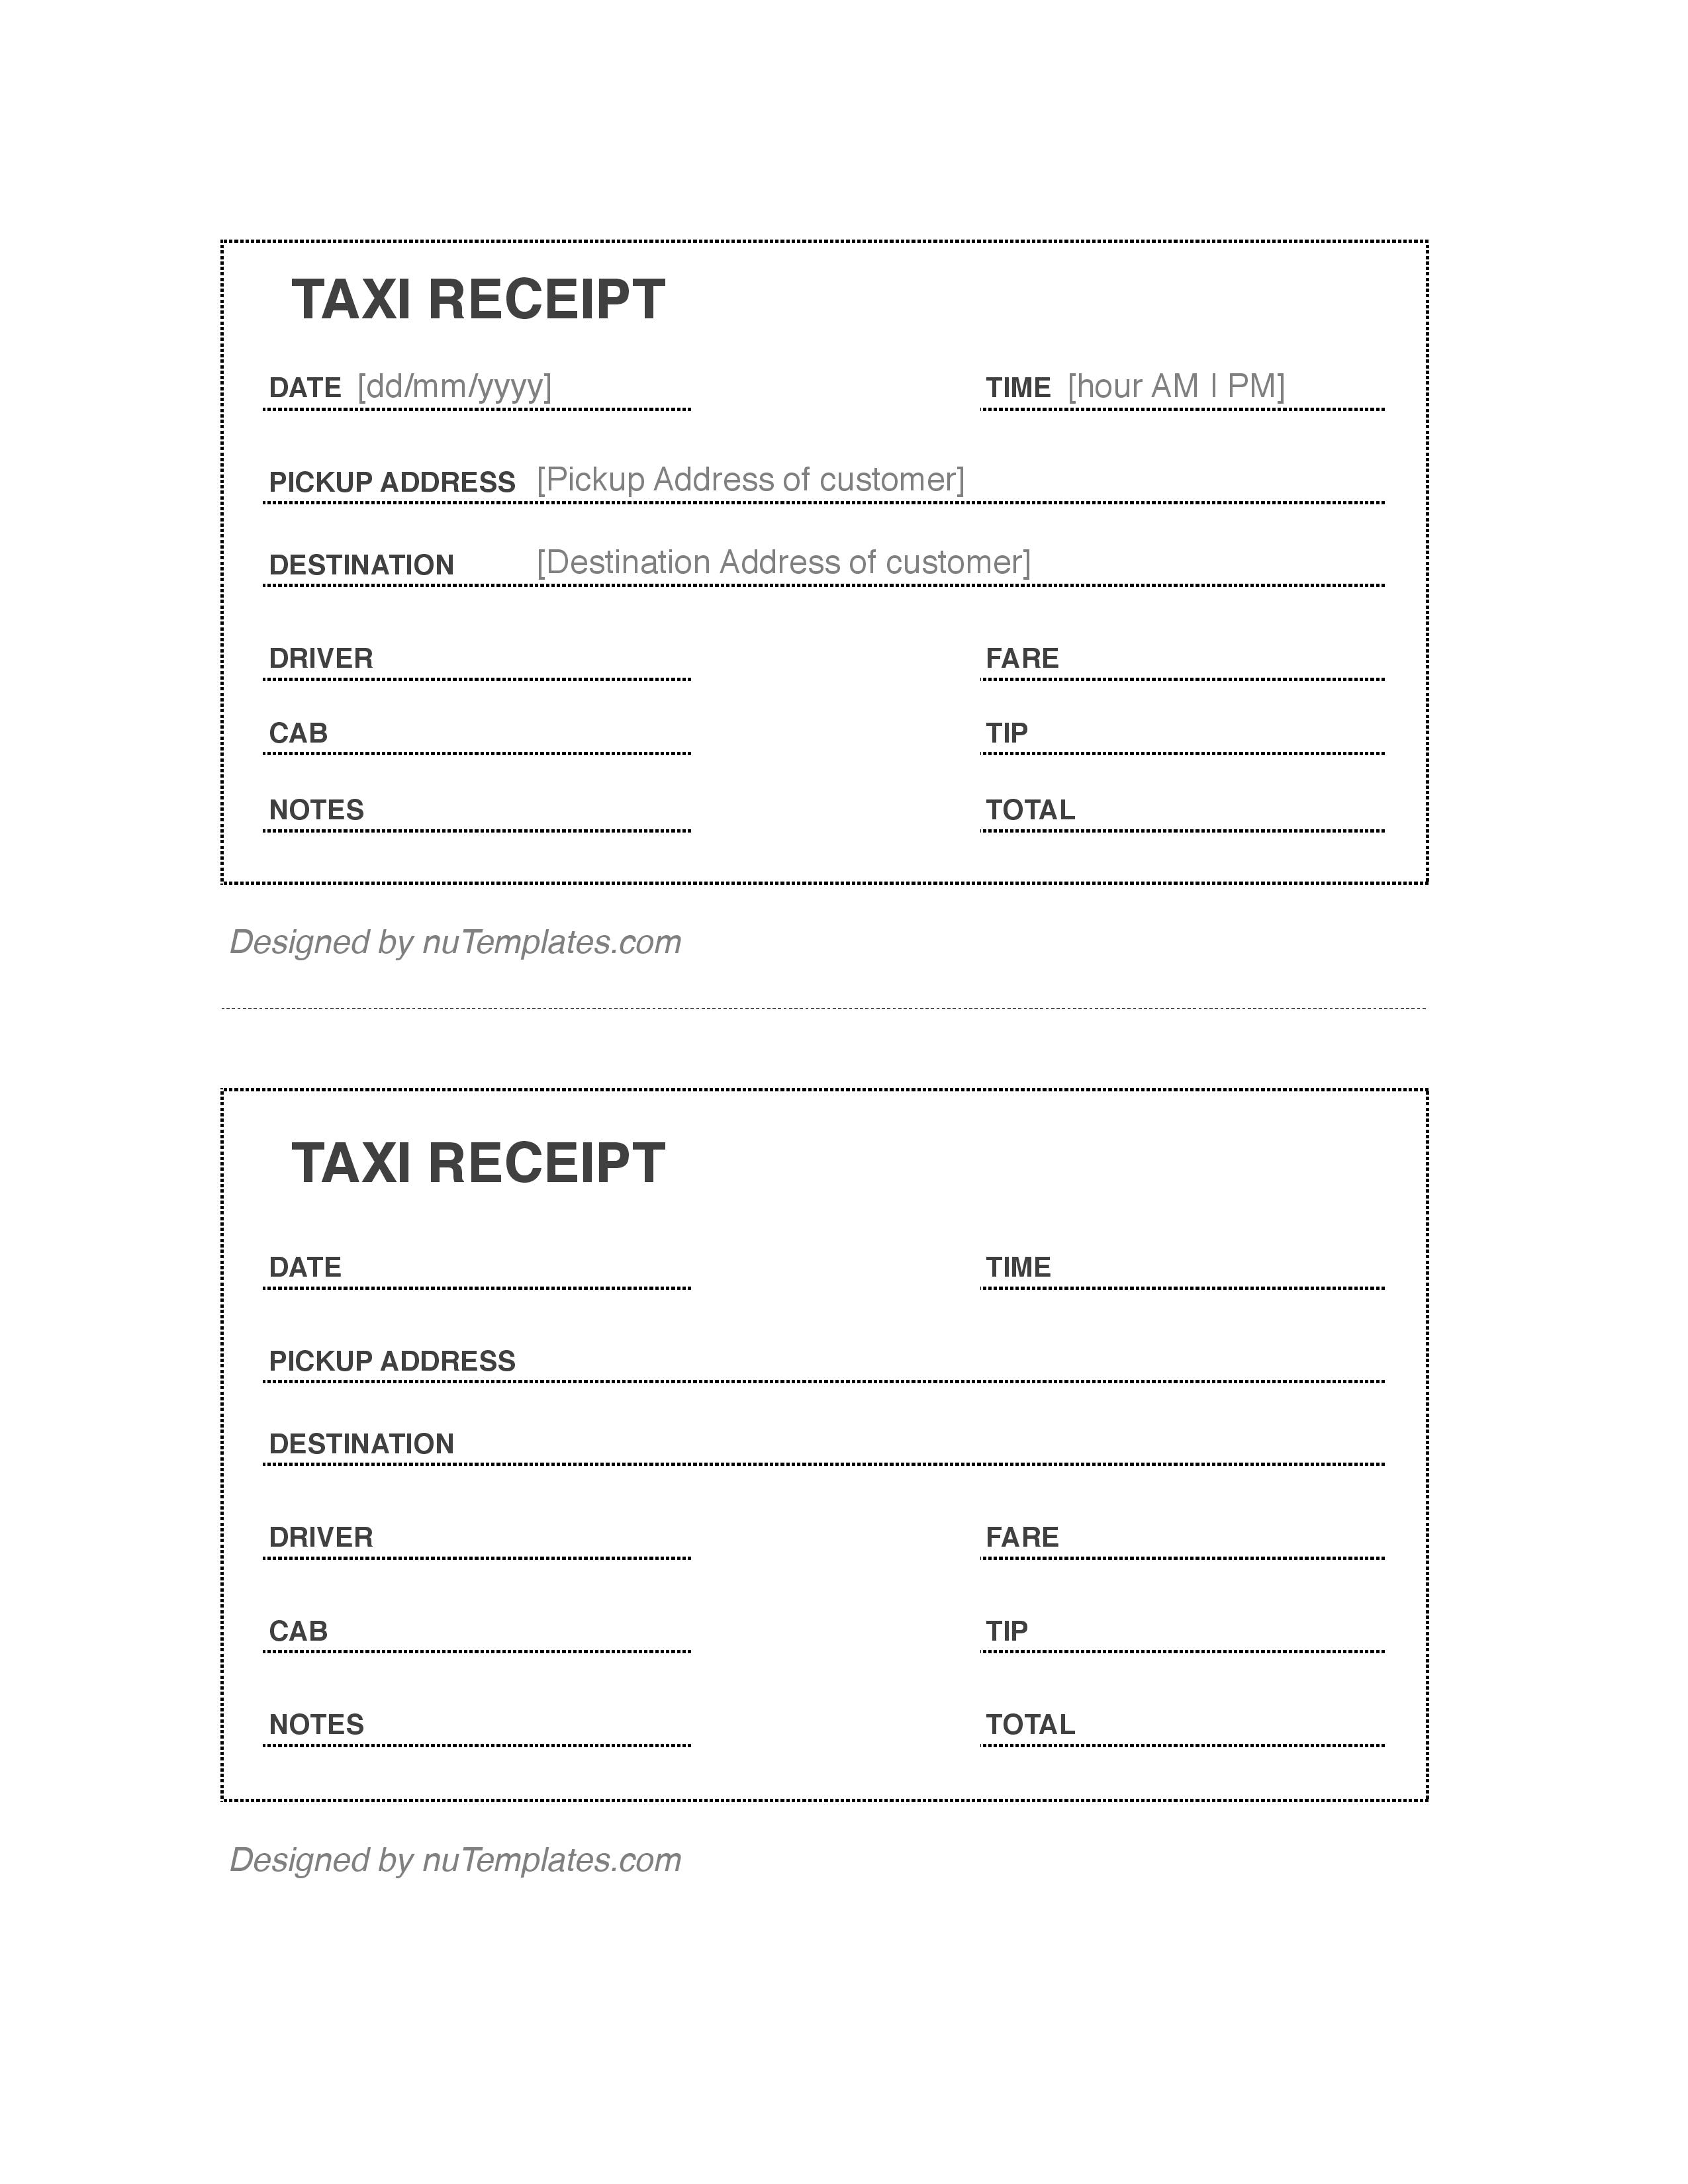 taxi-receipt-template